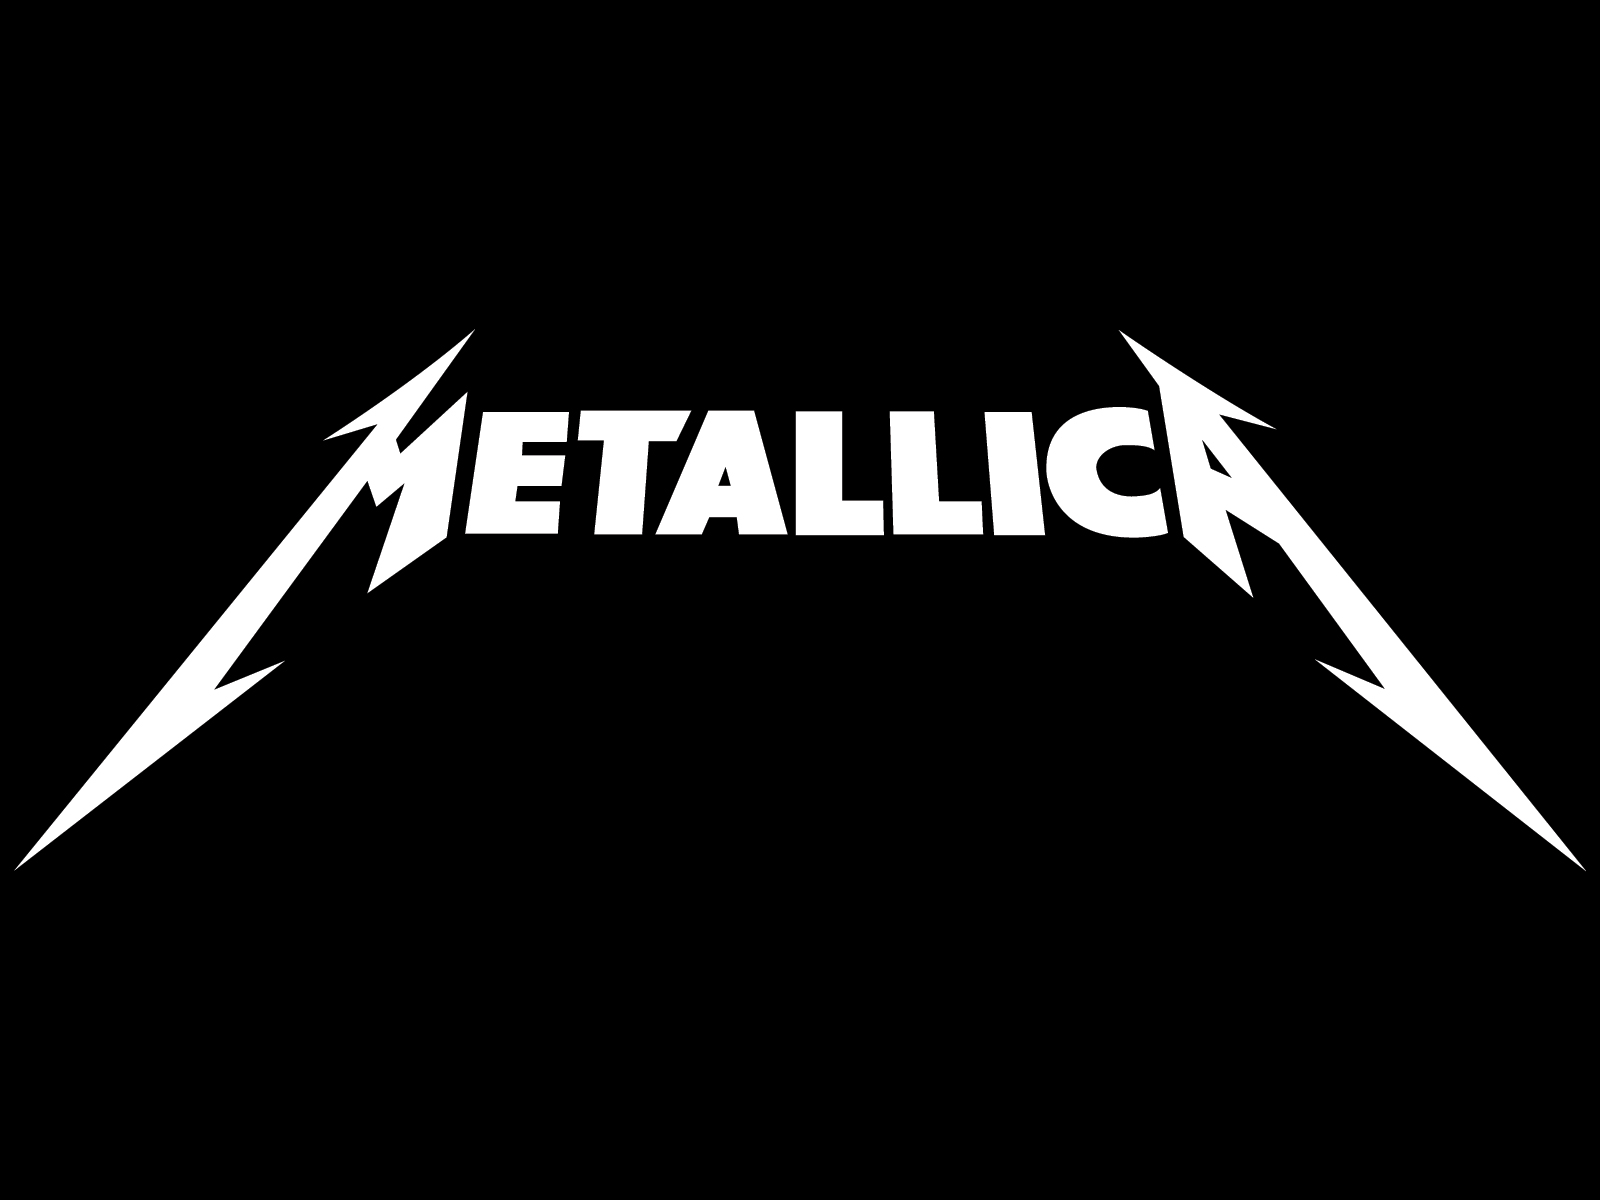 Metallica Wallpapers Band logos   Rock band logos metal bands logos